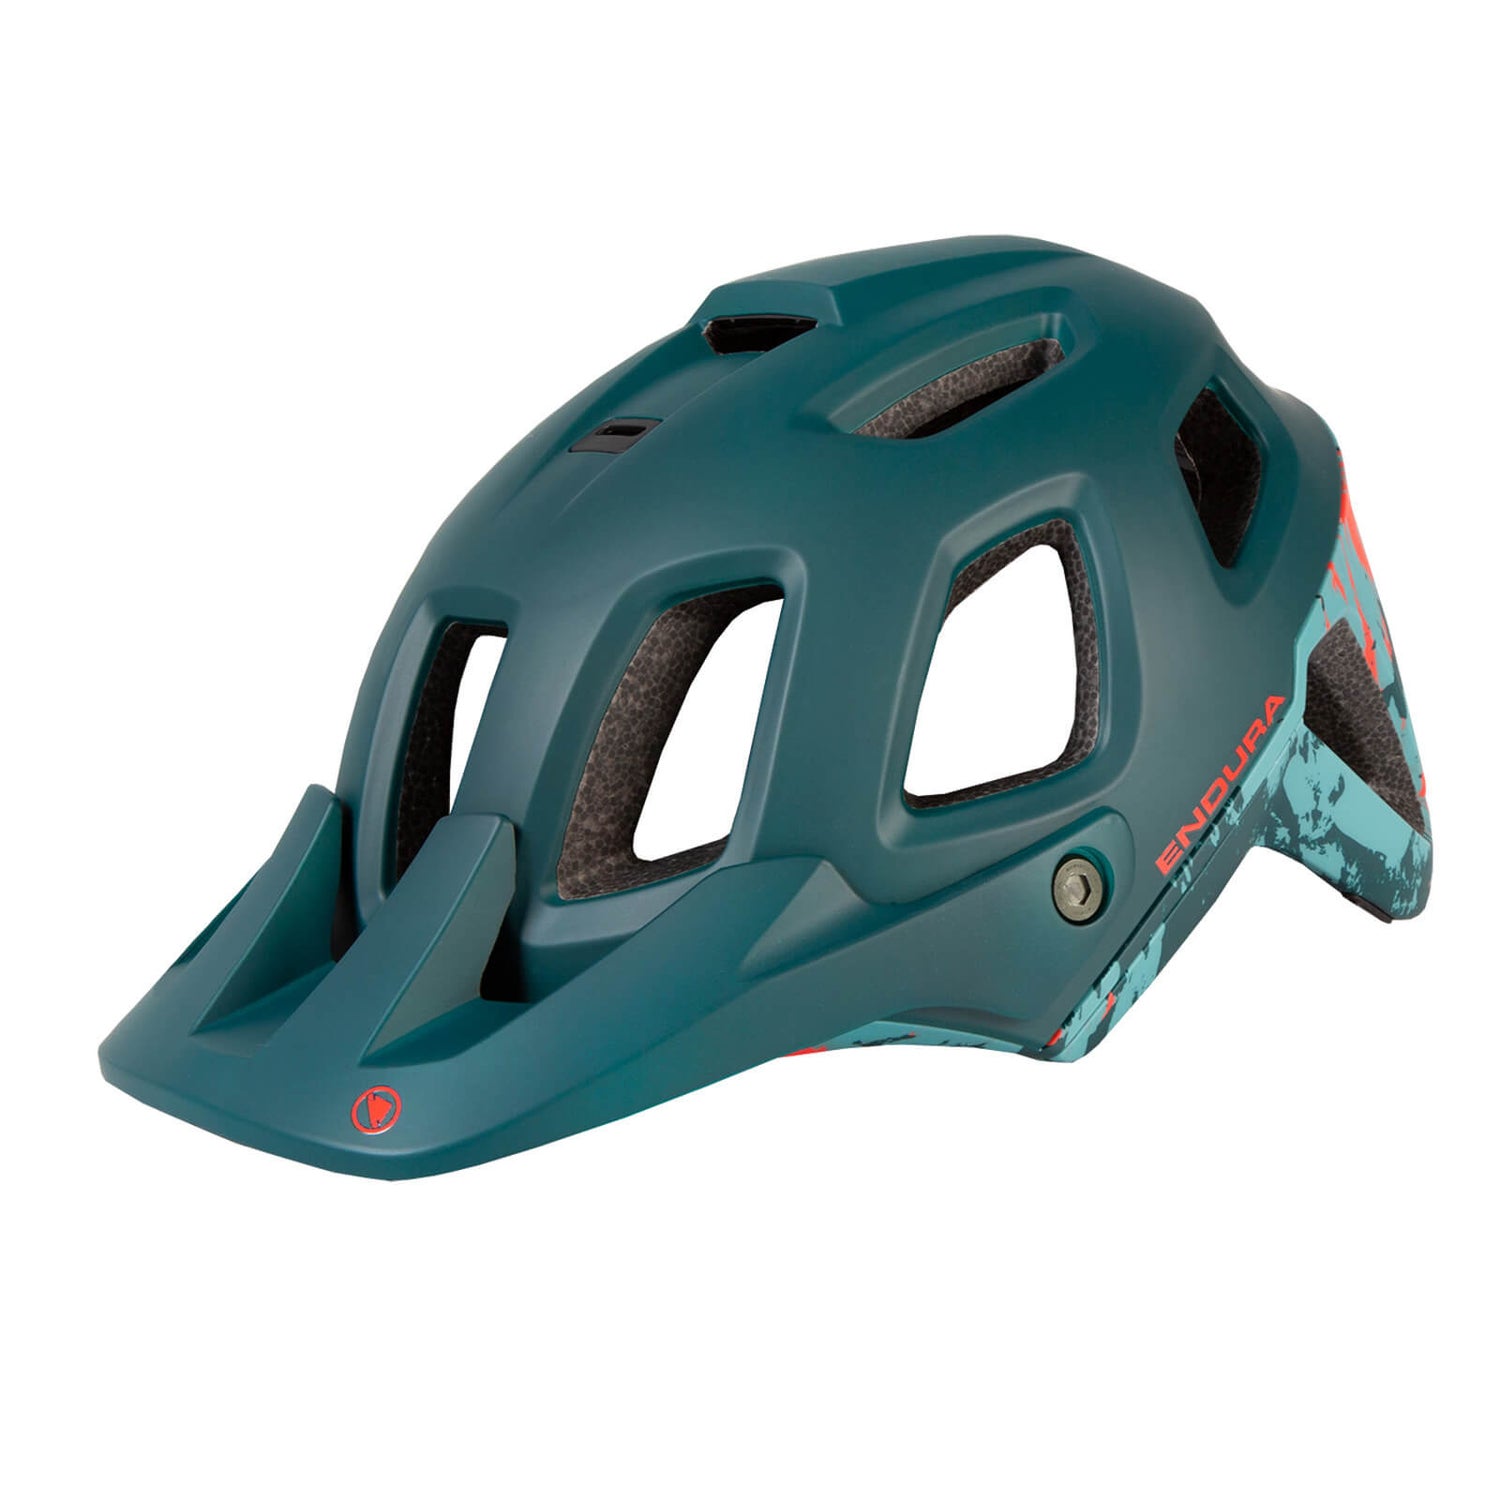 Men's SingleTrack Helmet II - Spruce Green